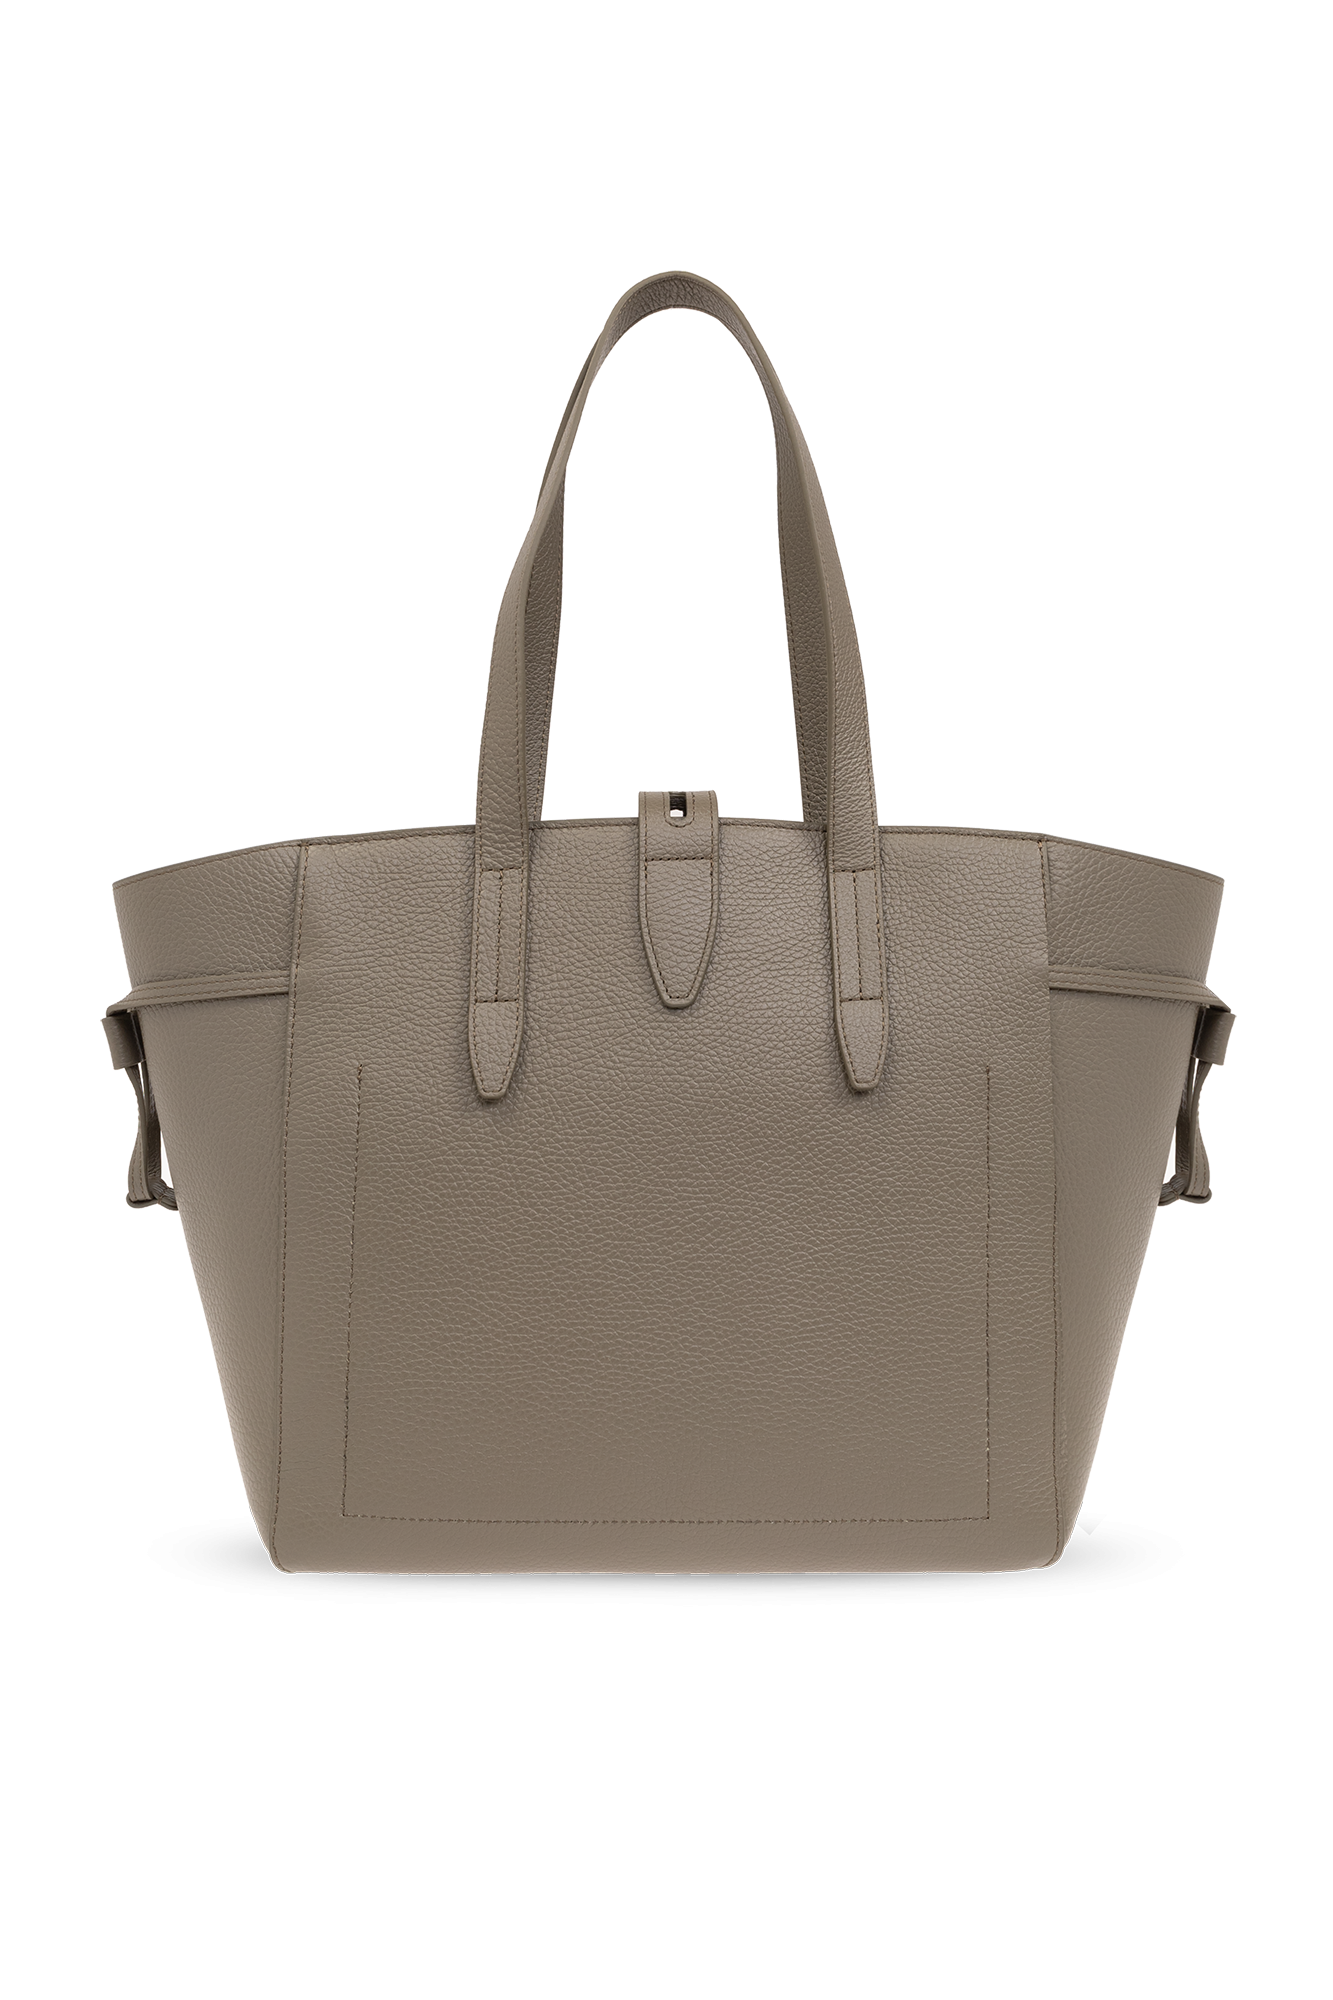 Furla ‘Net Medium’ shopper bag